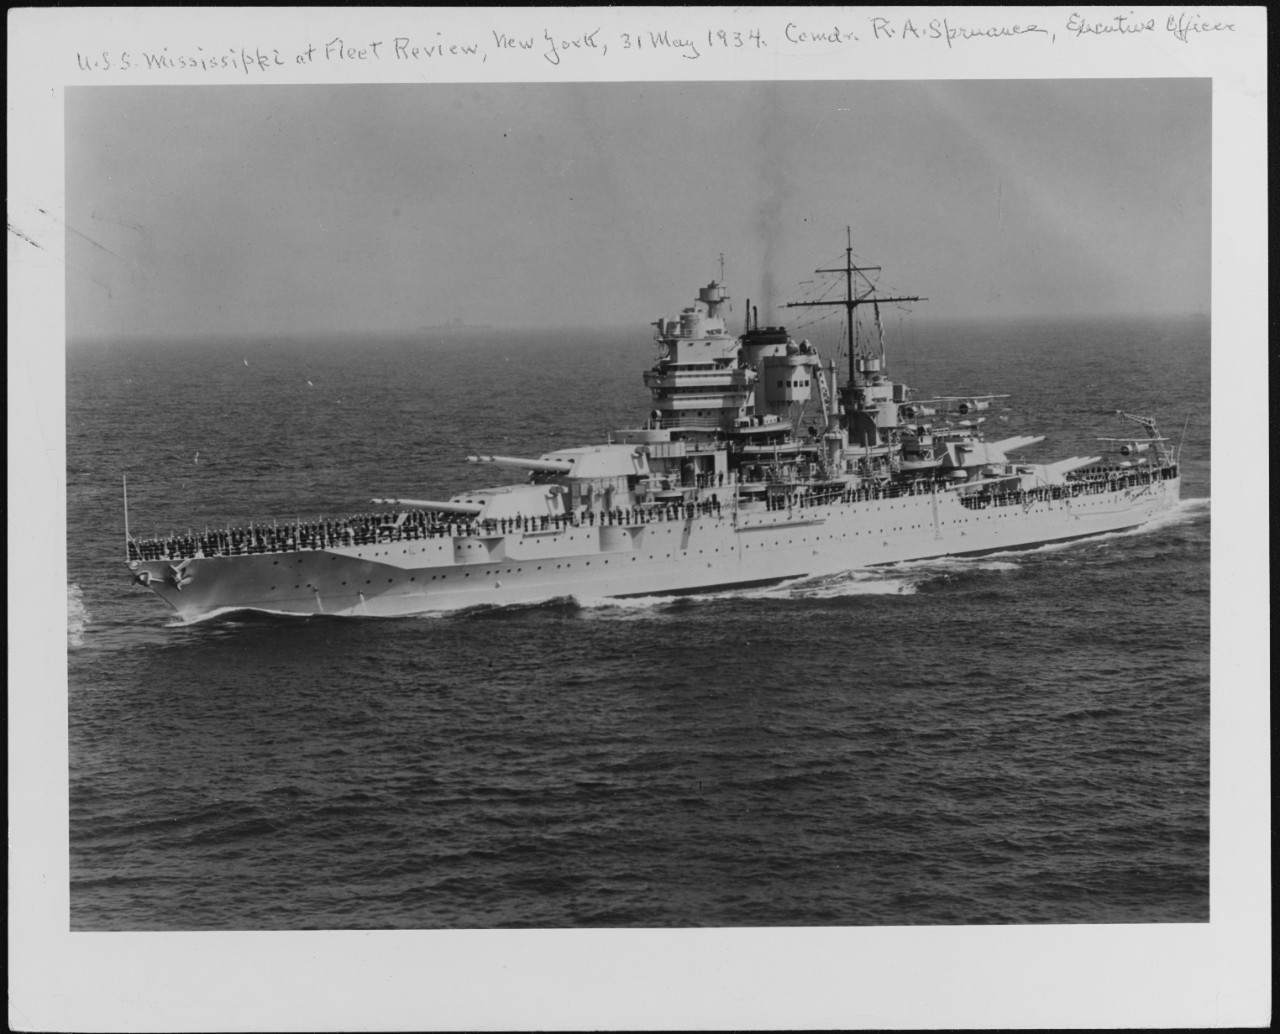 USS BATTLESHIP MISSISSIPPI at Fleet Review, New York, 31 May 1934